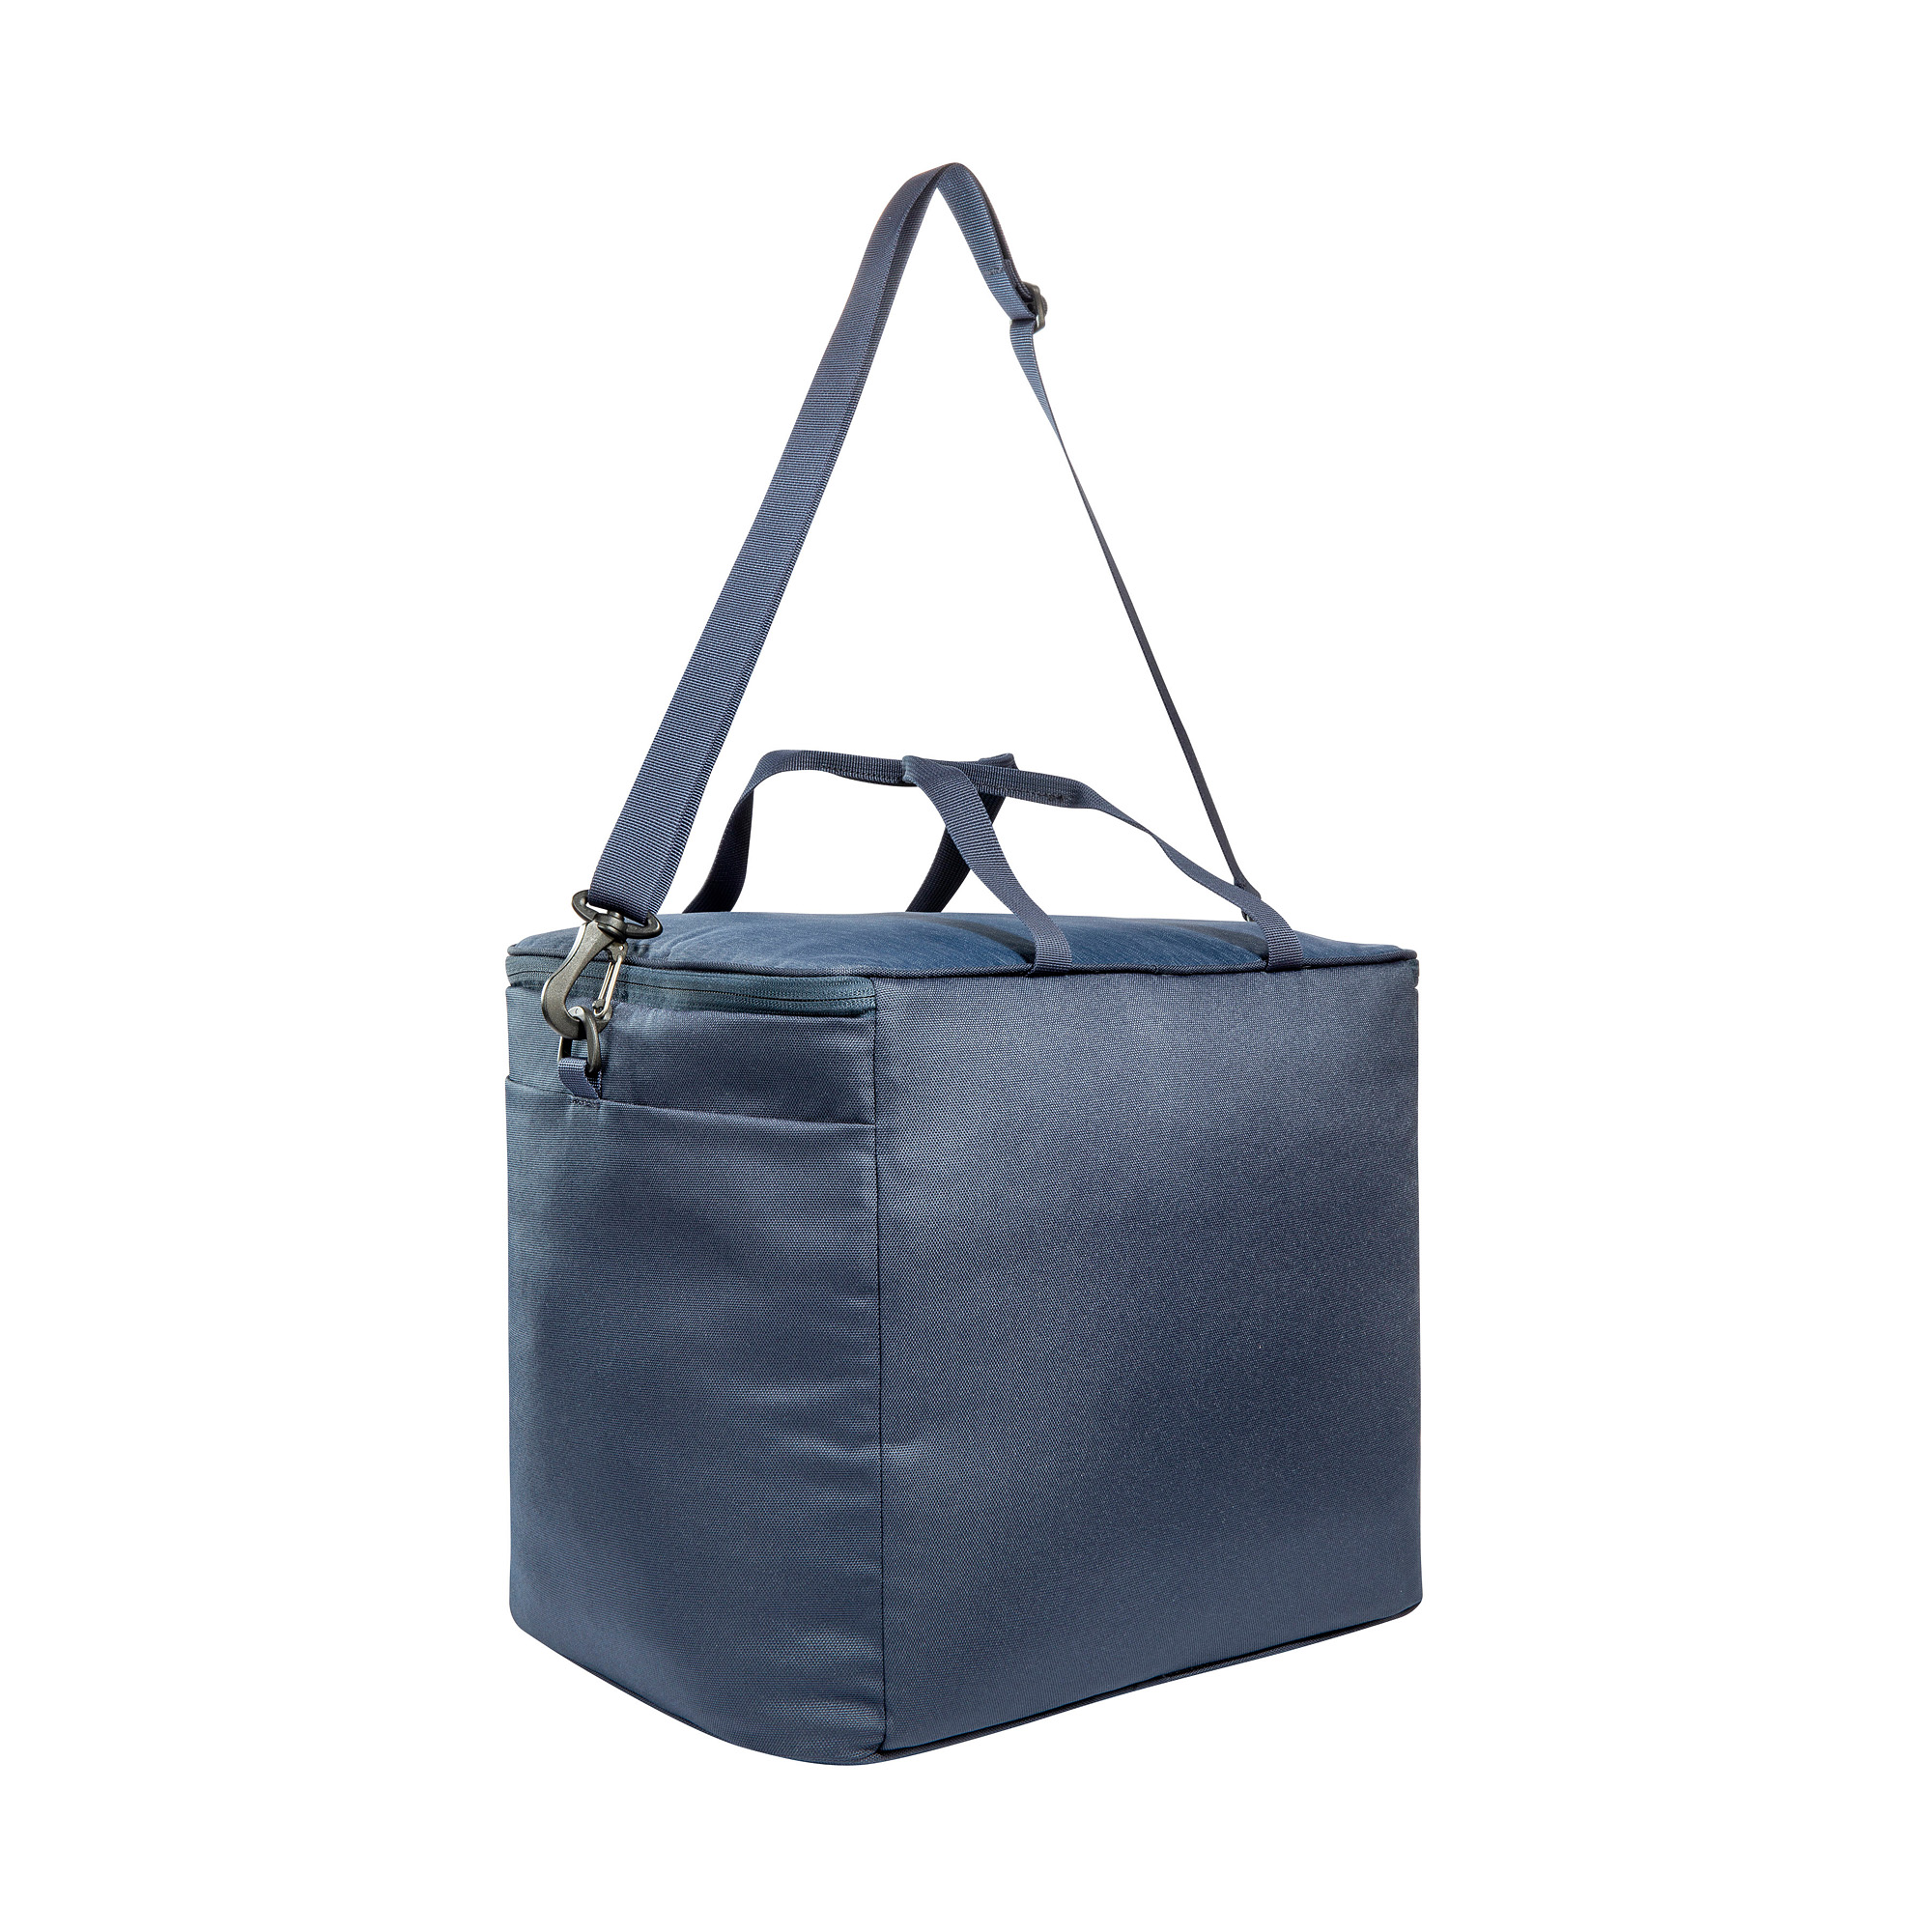 Tatonka Cooler Bag L navy blau Sonstige Taschen 4013236384550